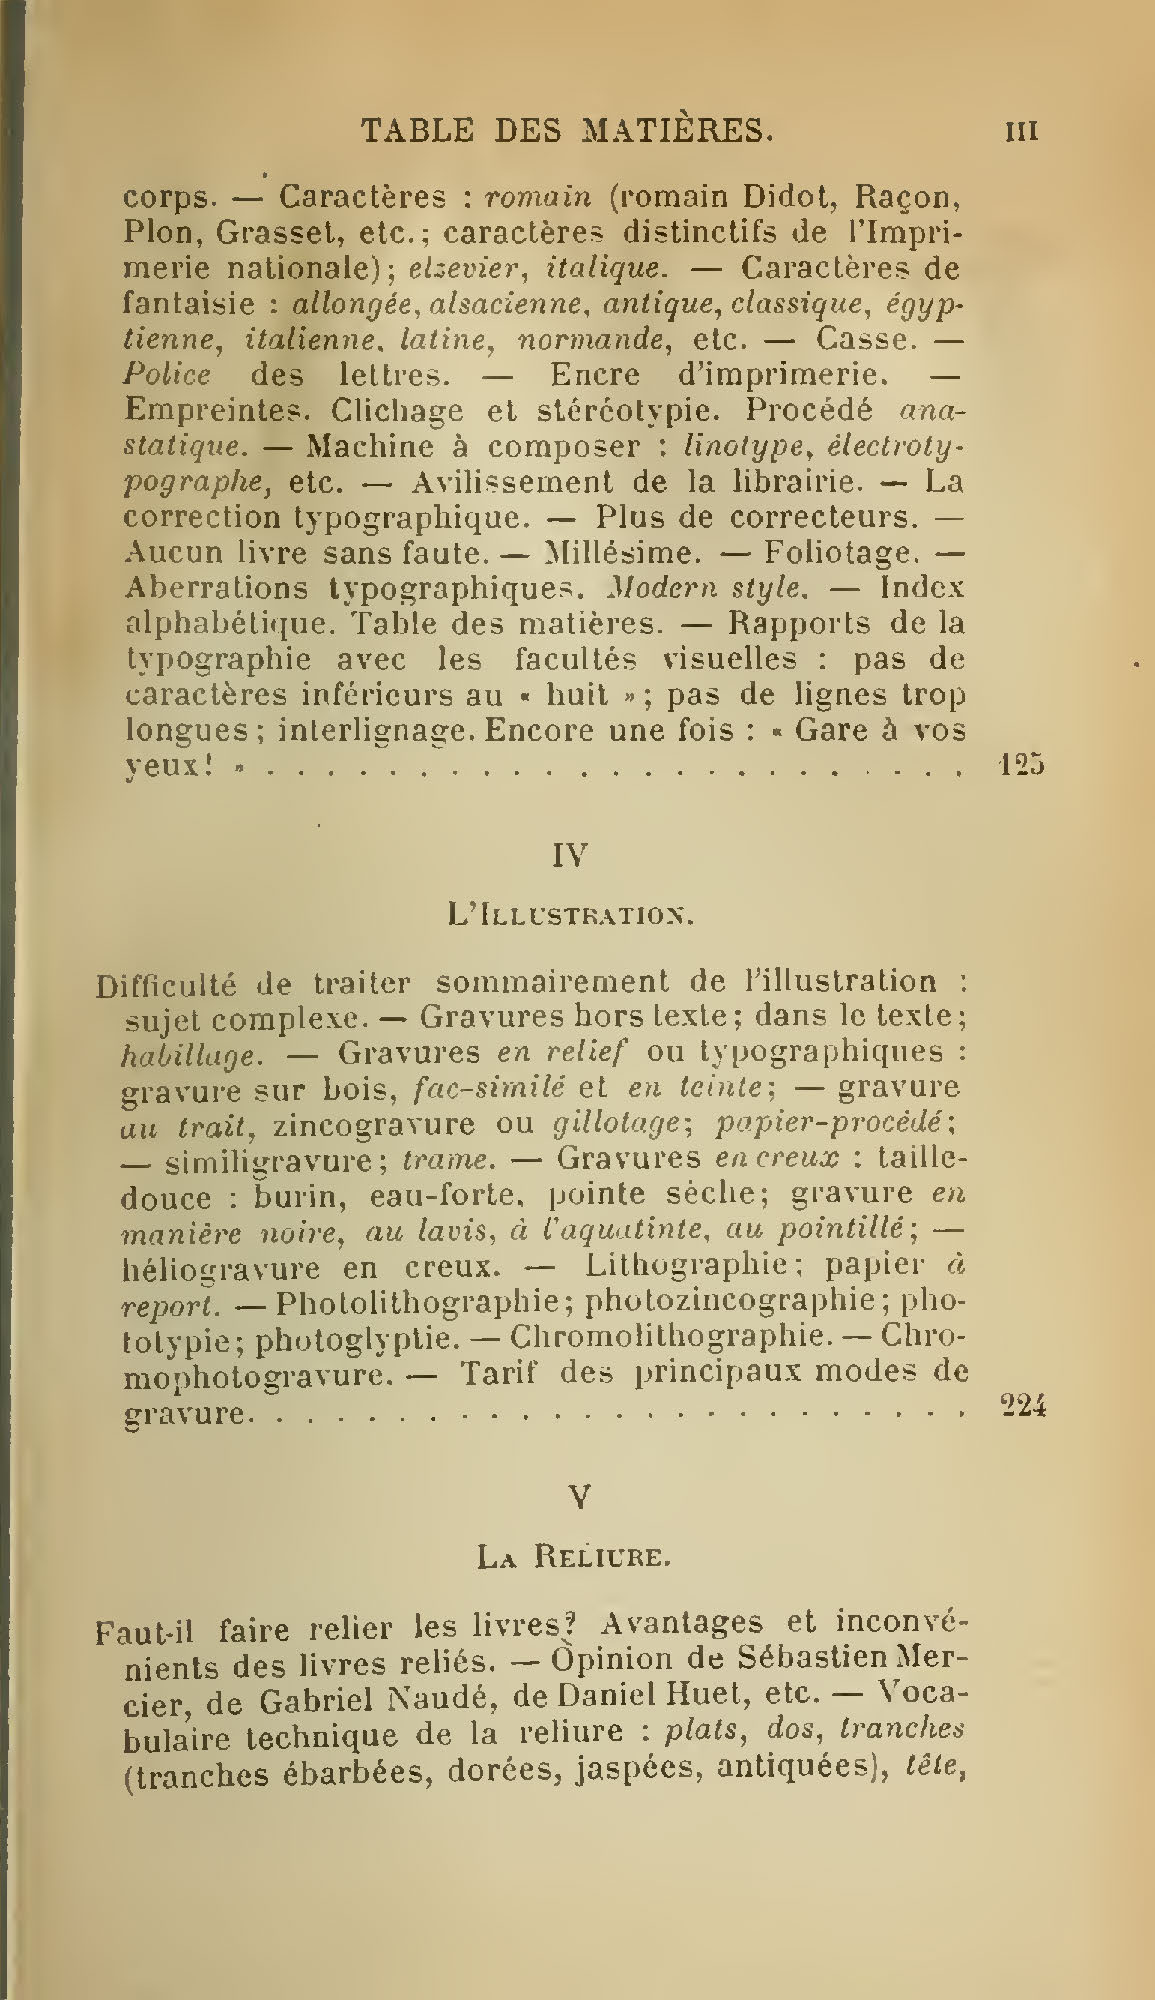 Albert Cim, Le Livre, t. III, p. III.